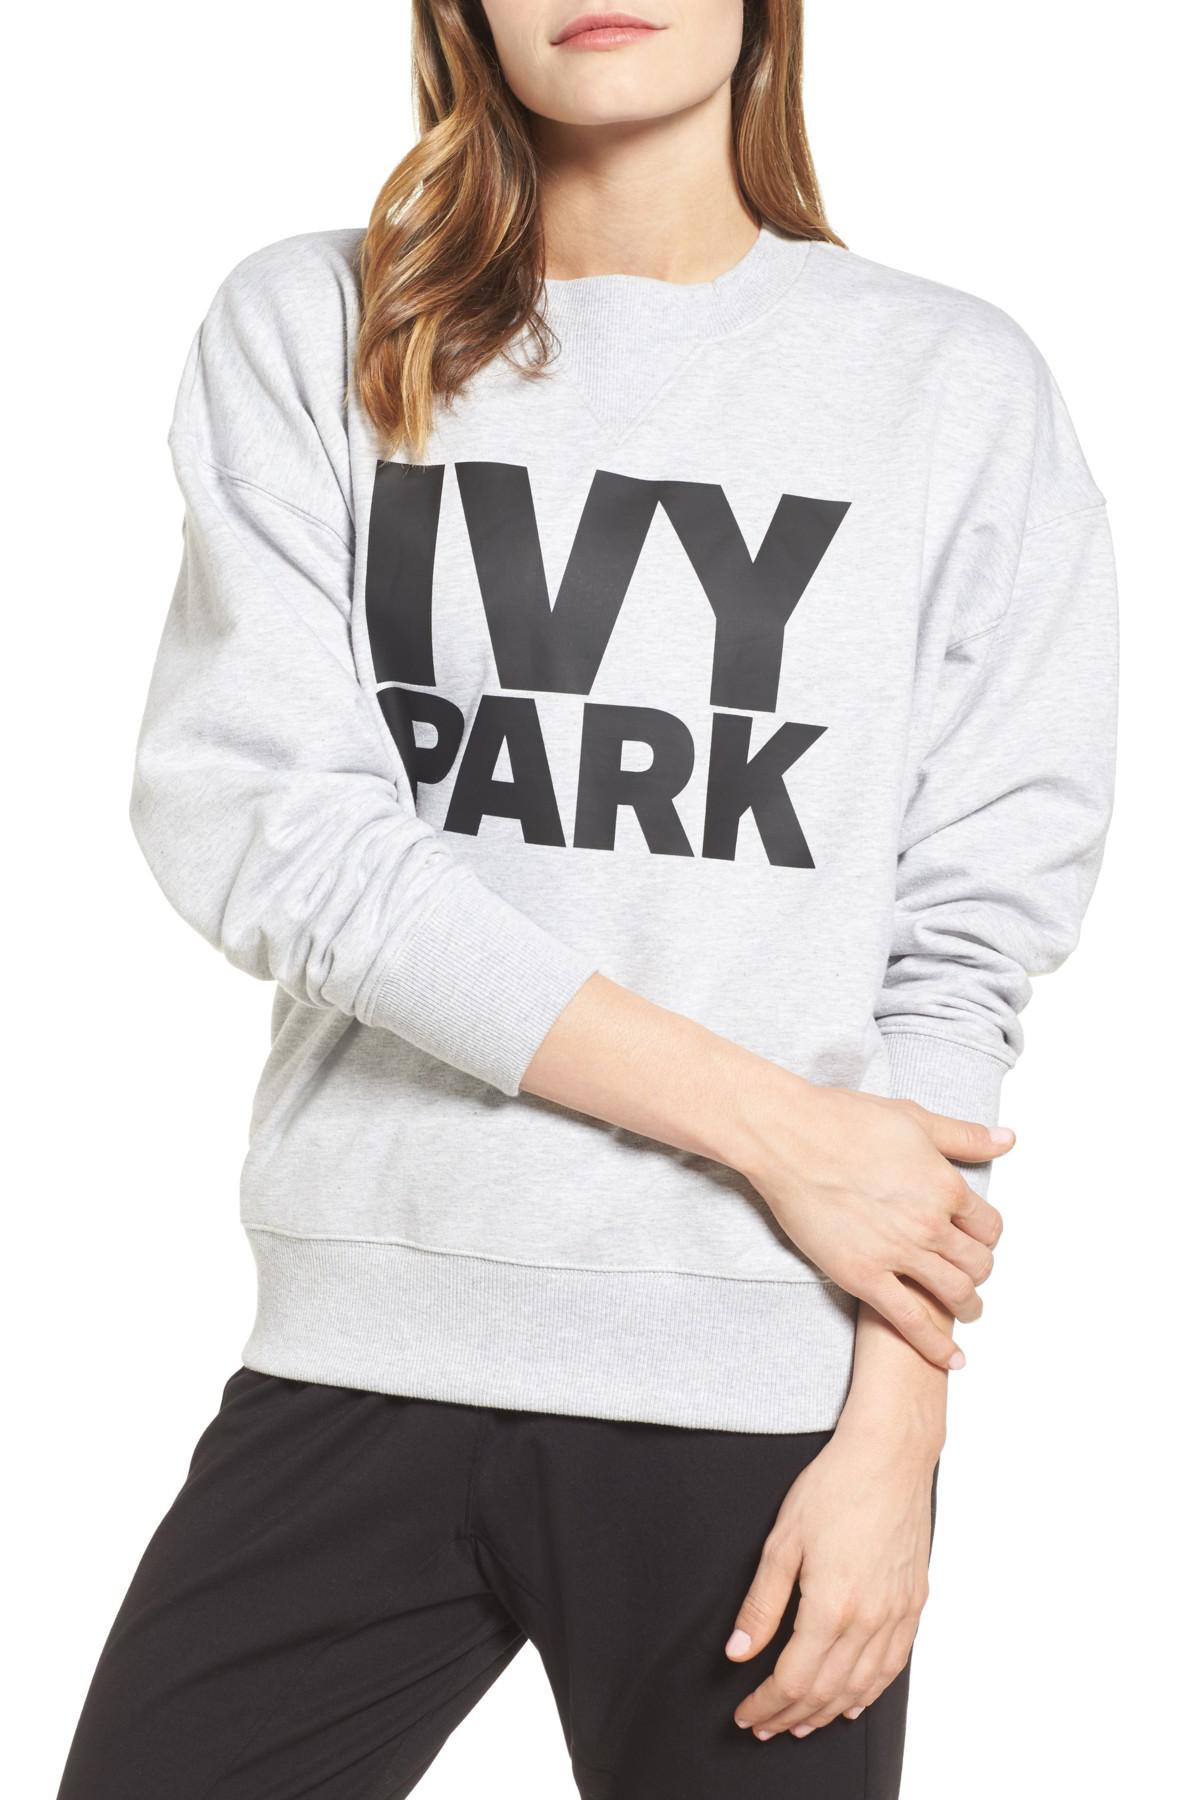 Lyst - Ivy park Logo Sweatshirt in Grey - Save 52%1200 x 1800